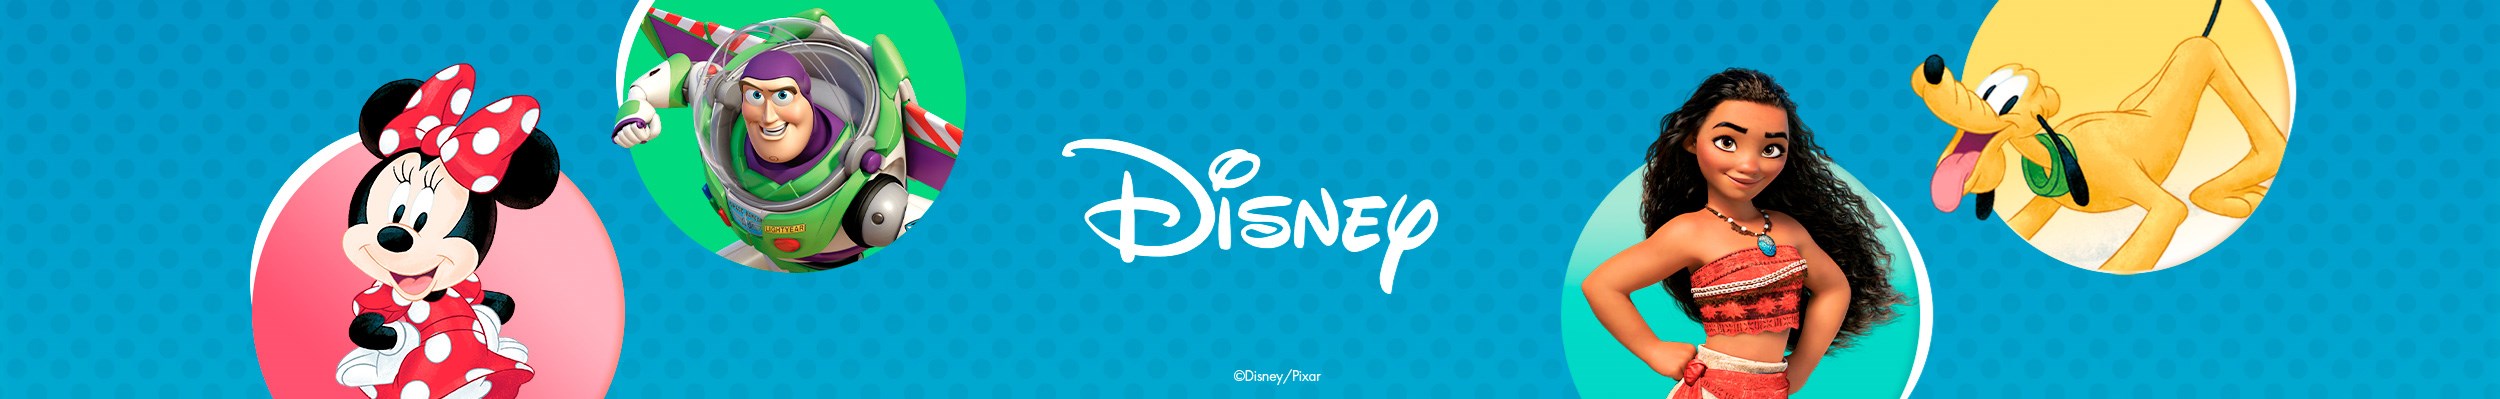 Banner principal Disney